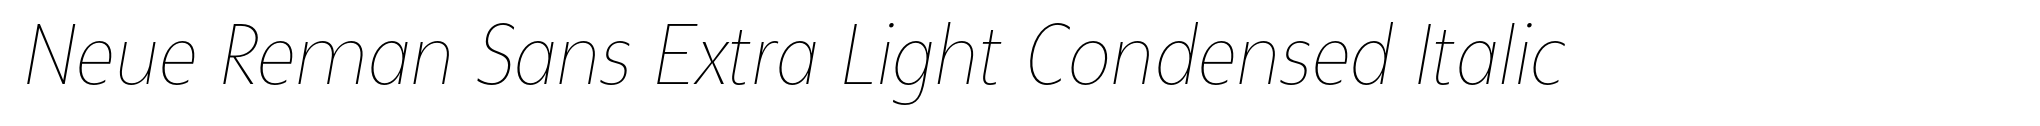 Neue Reman Sans Extra Light Condensed Italic image